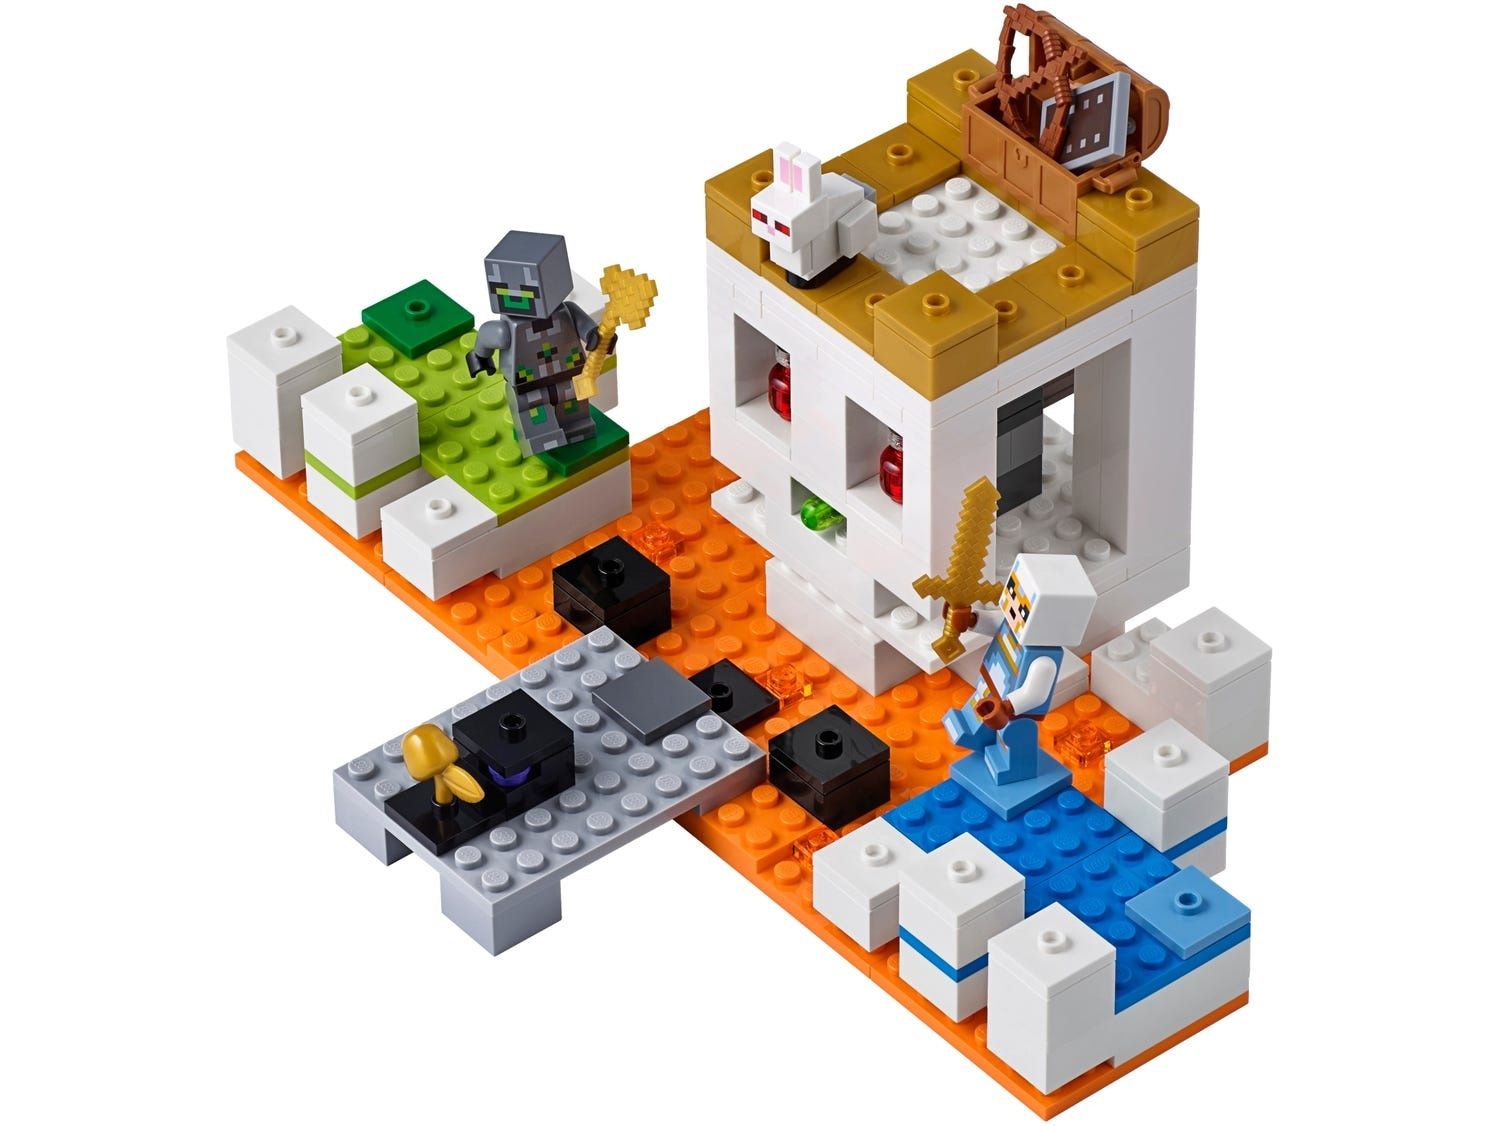 Lego minecraft 21145